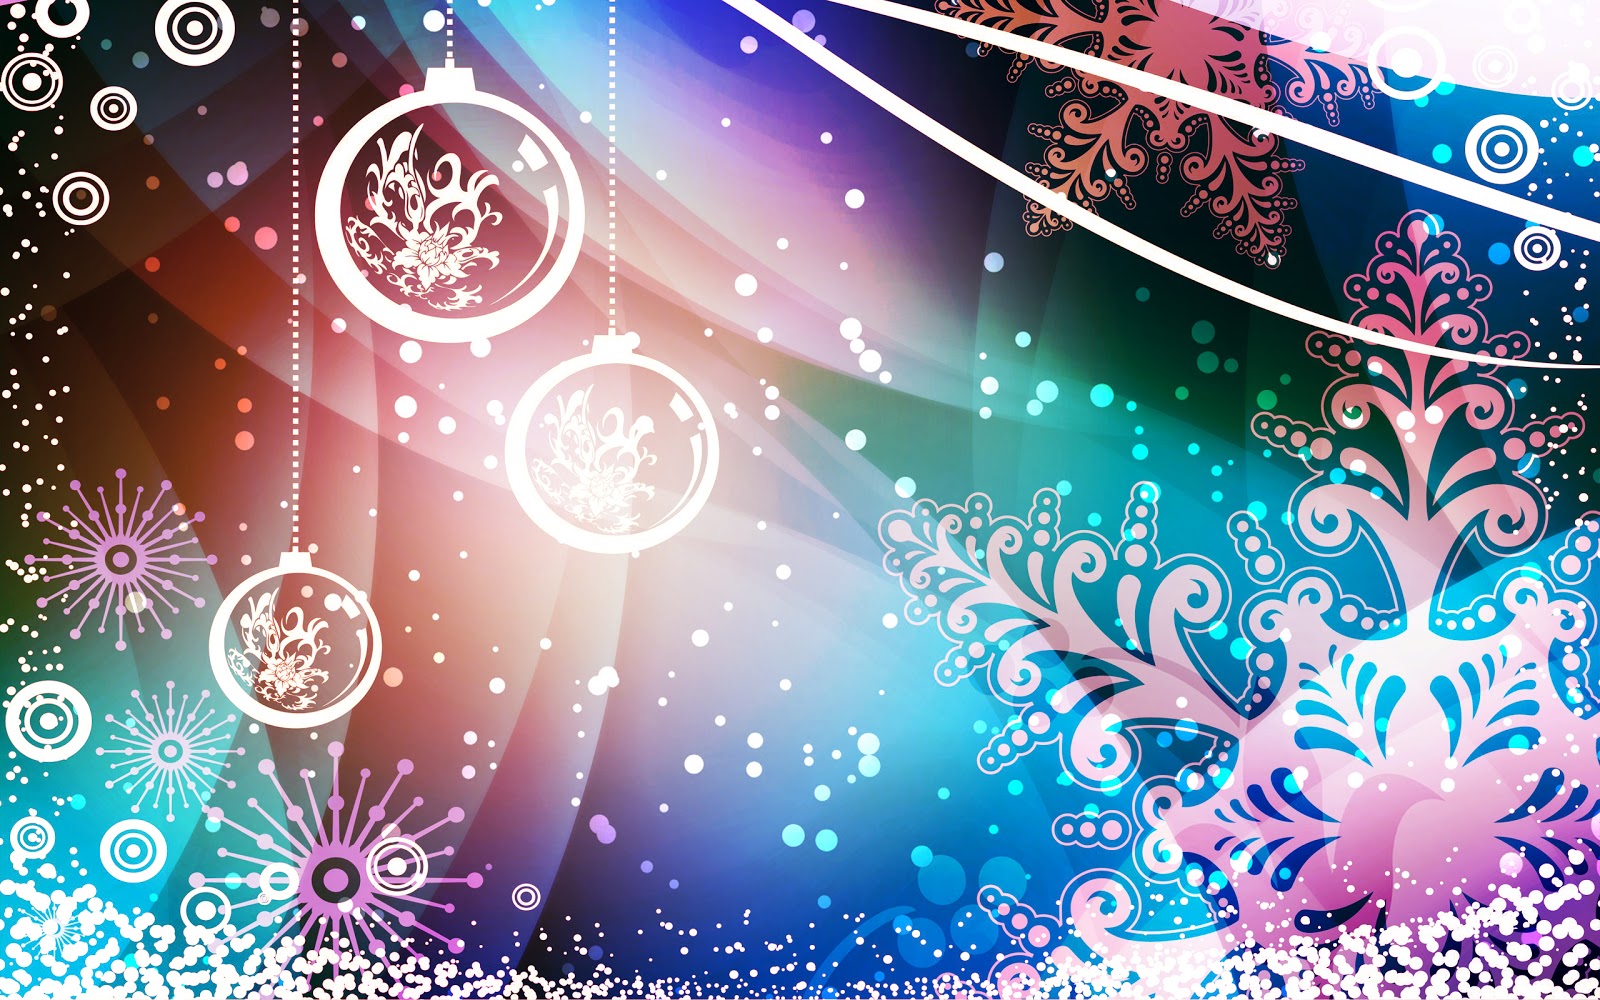 Merry Christmas 2013 WallpaperComputer Wallpaper Free